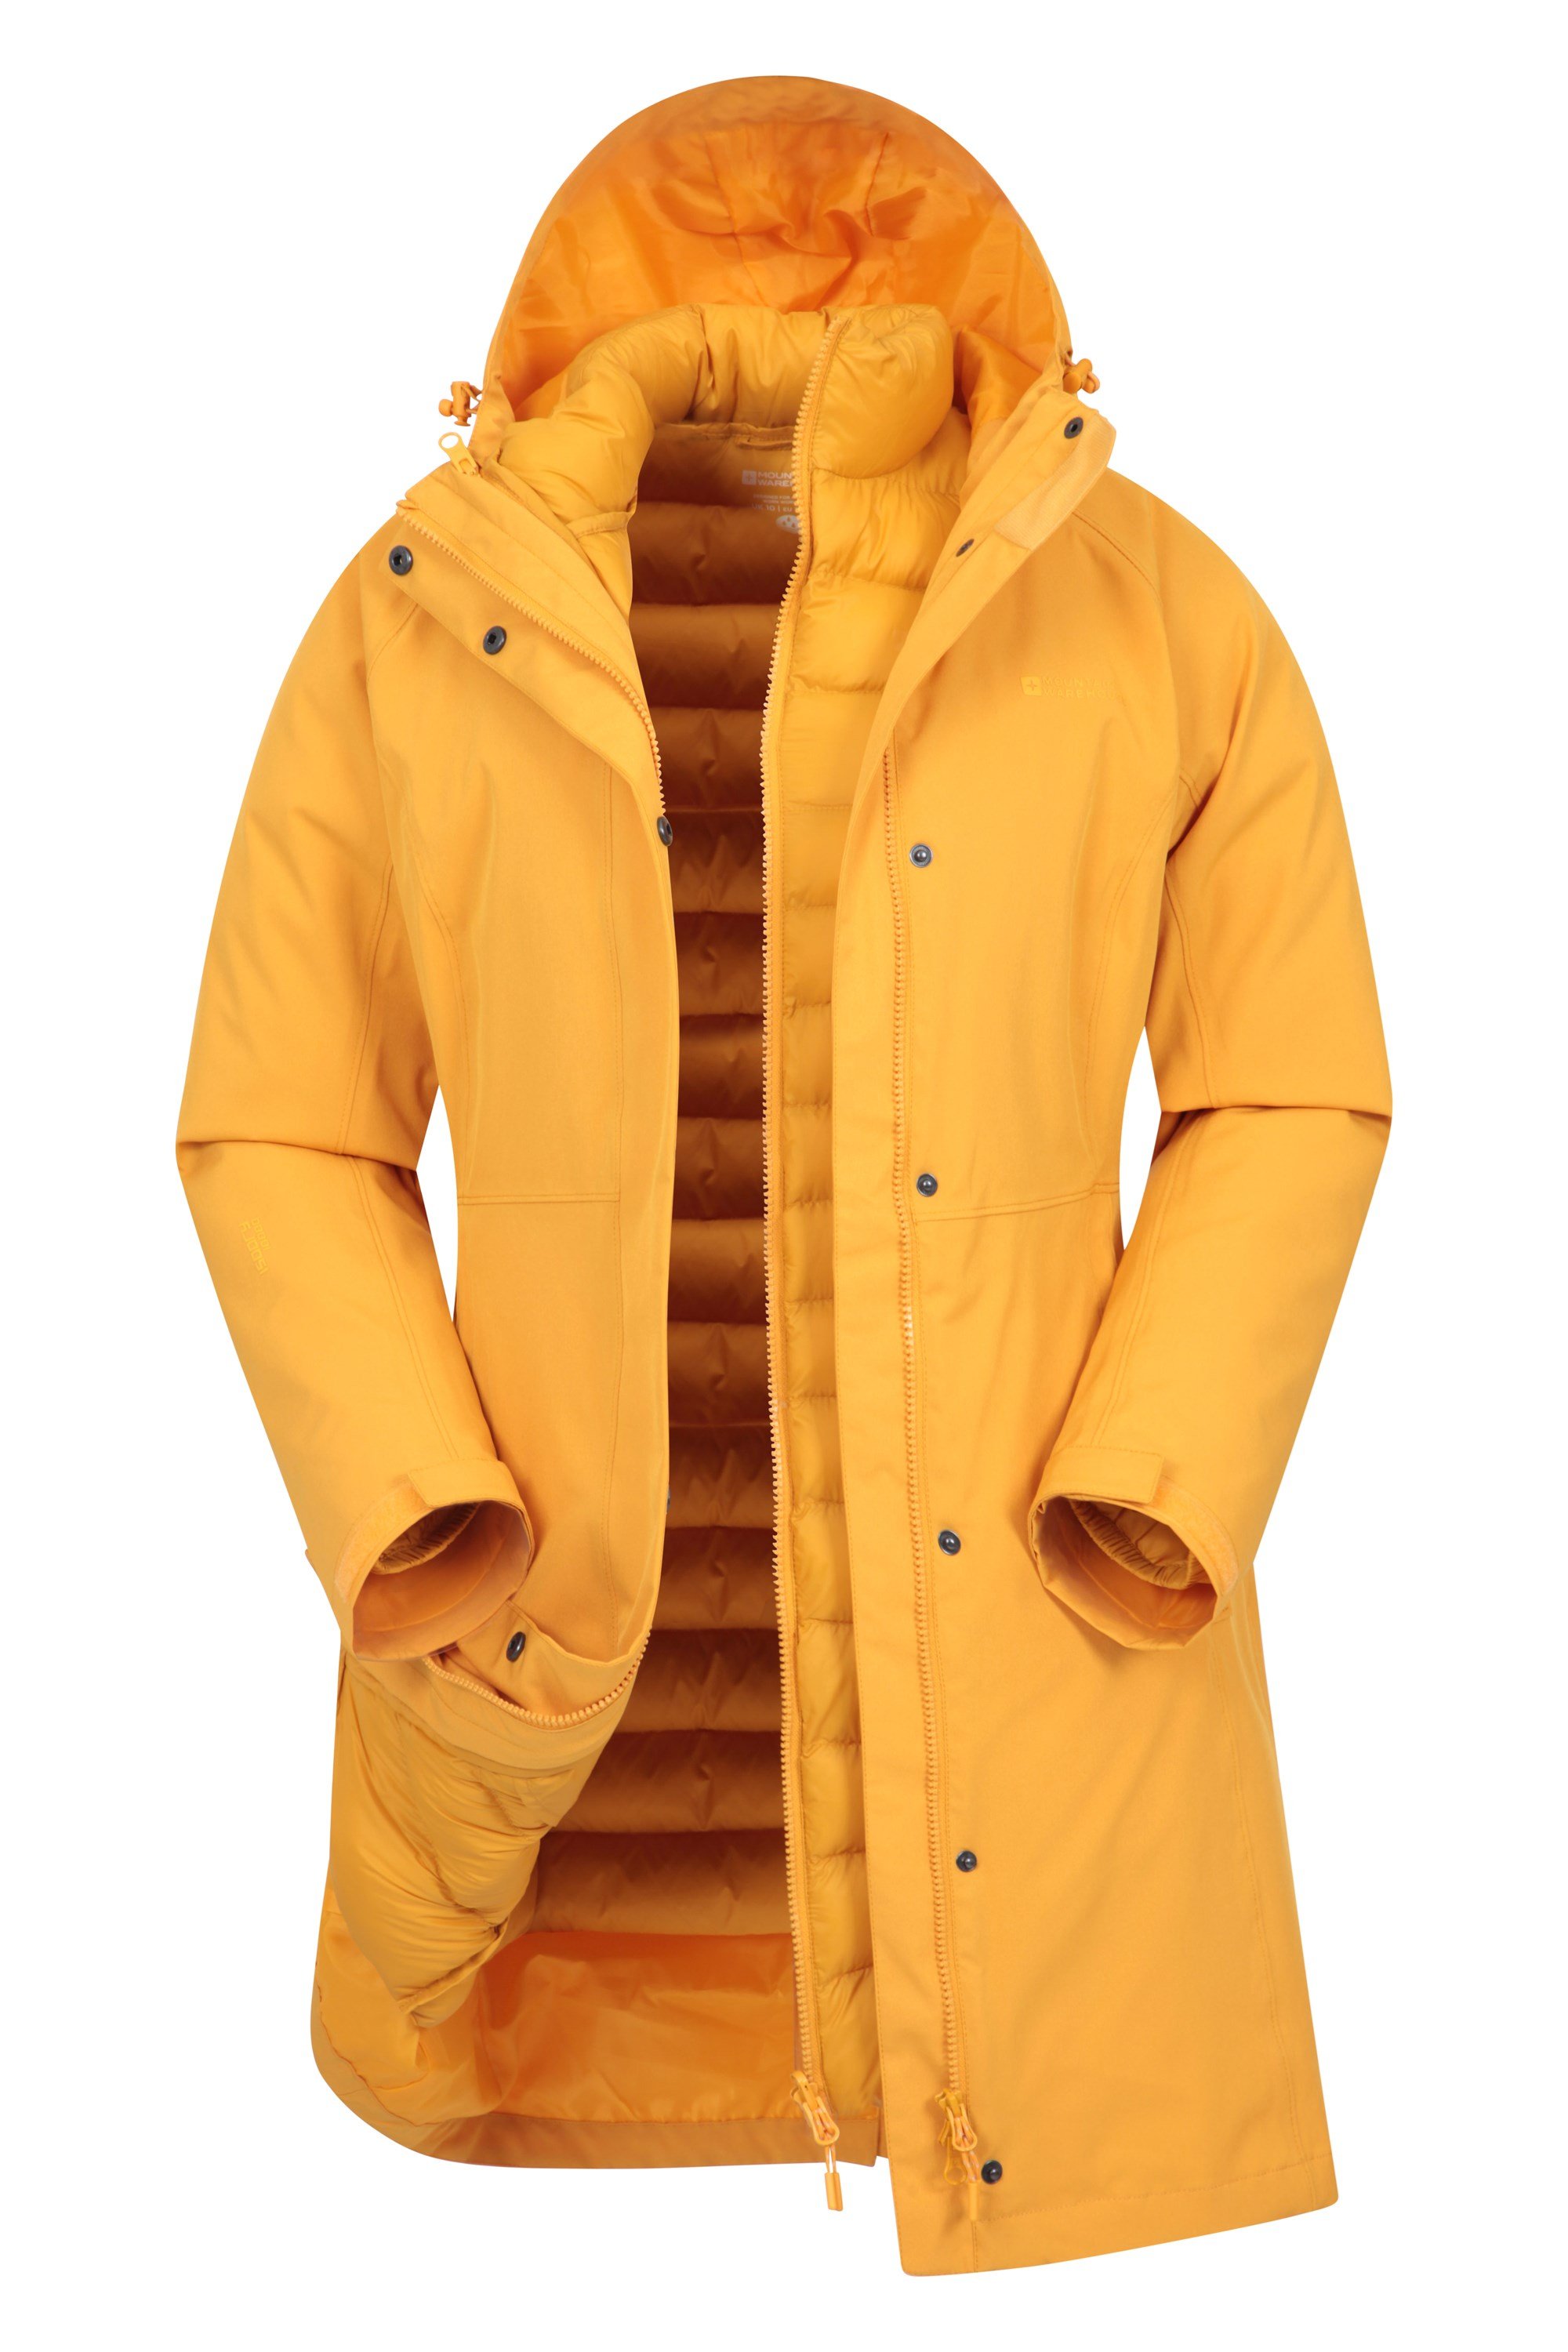 Alaskan Womens 3 in 1 Long Jacket - Yellow